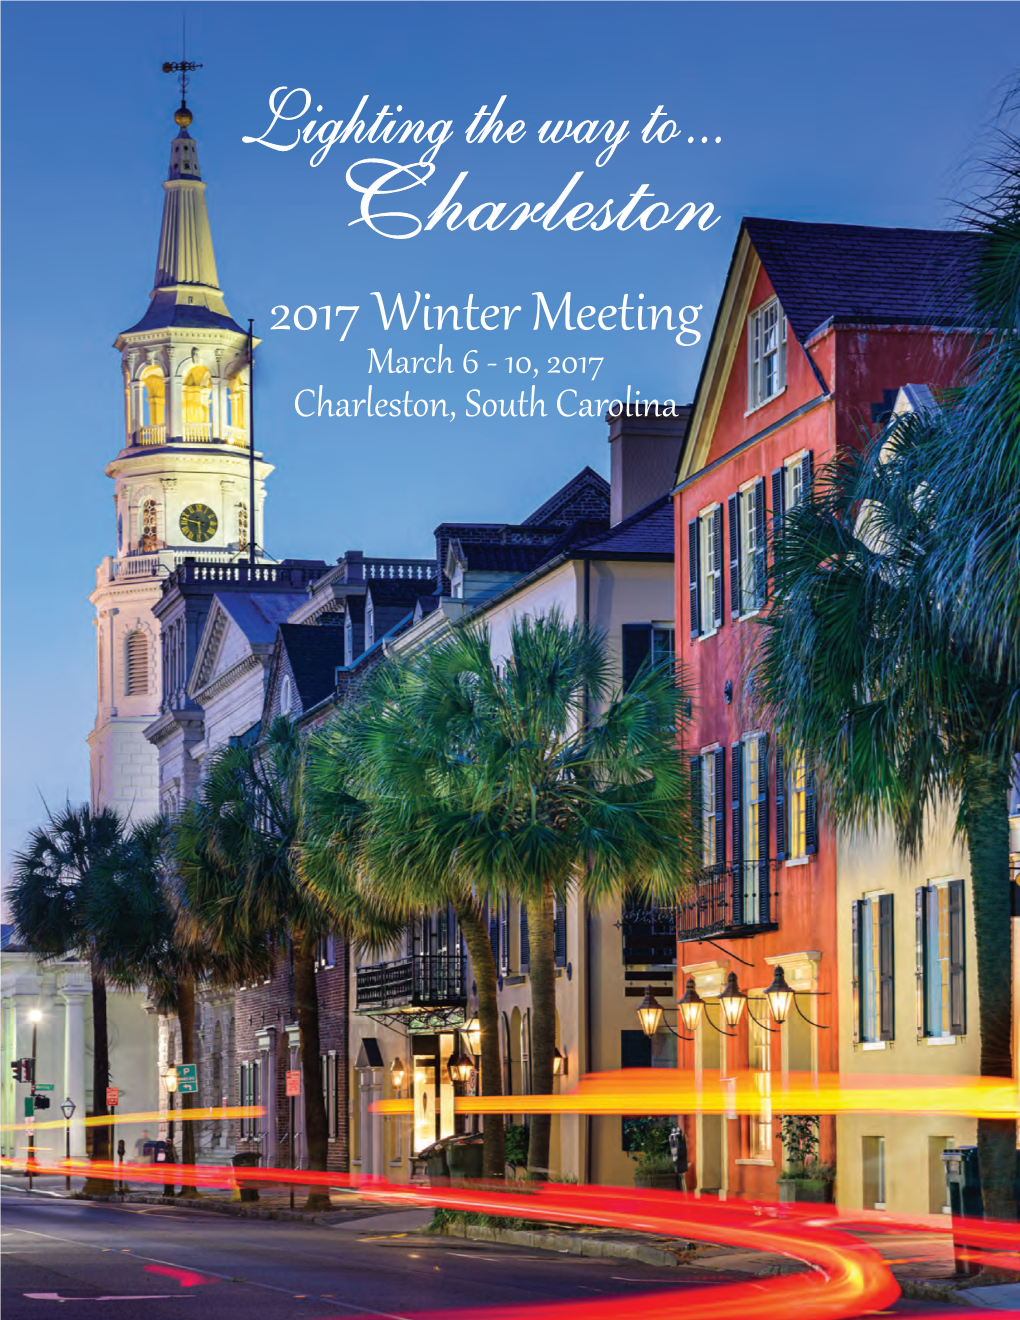 2017 Winter Meeting March 6 - 10, 2017 Charleston, South Carolina